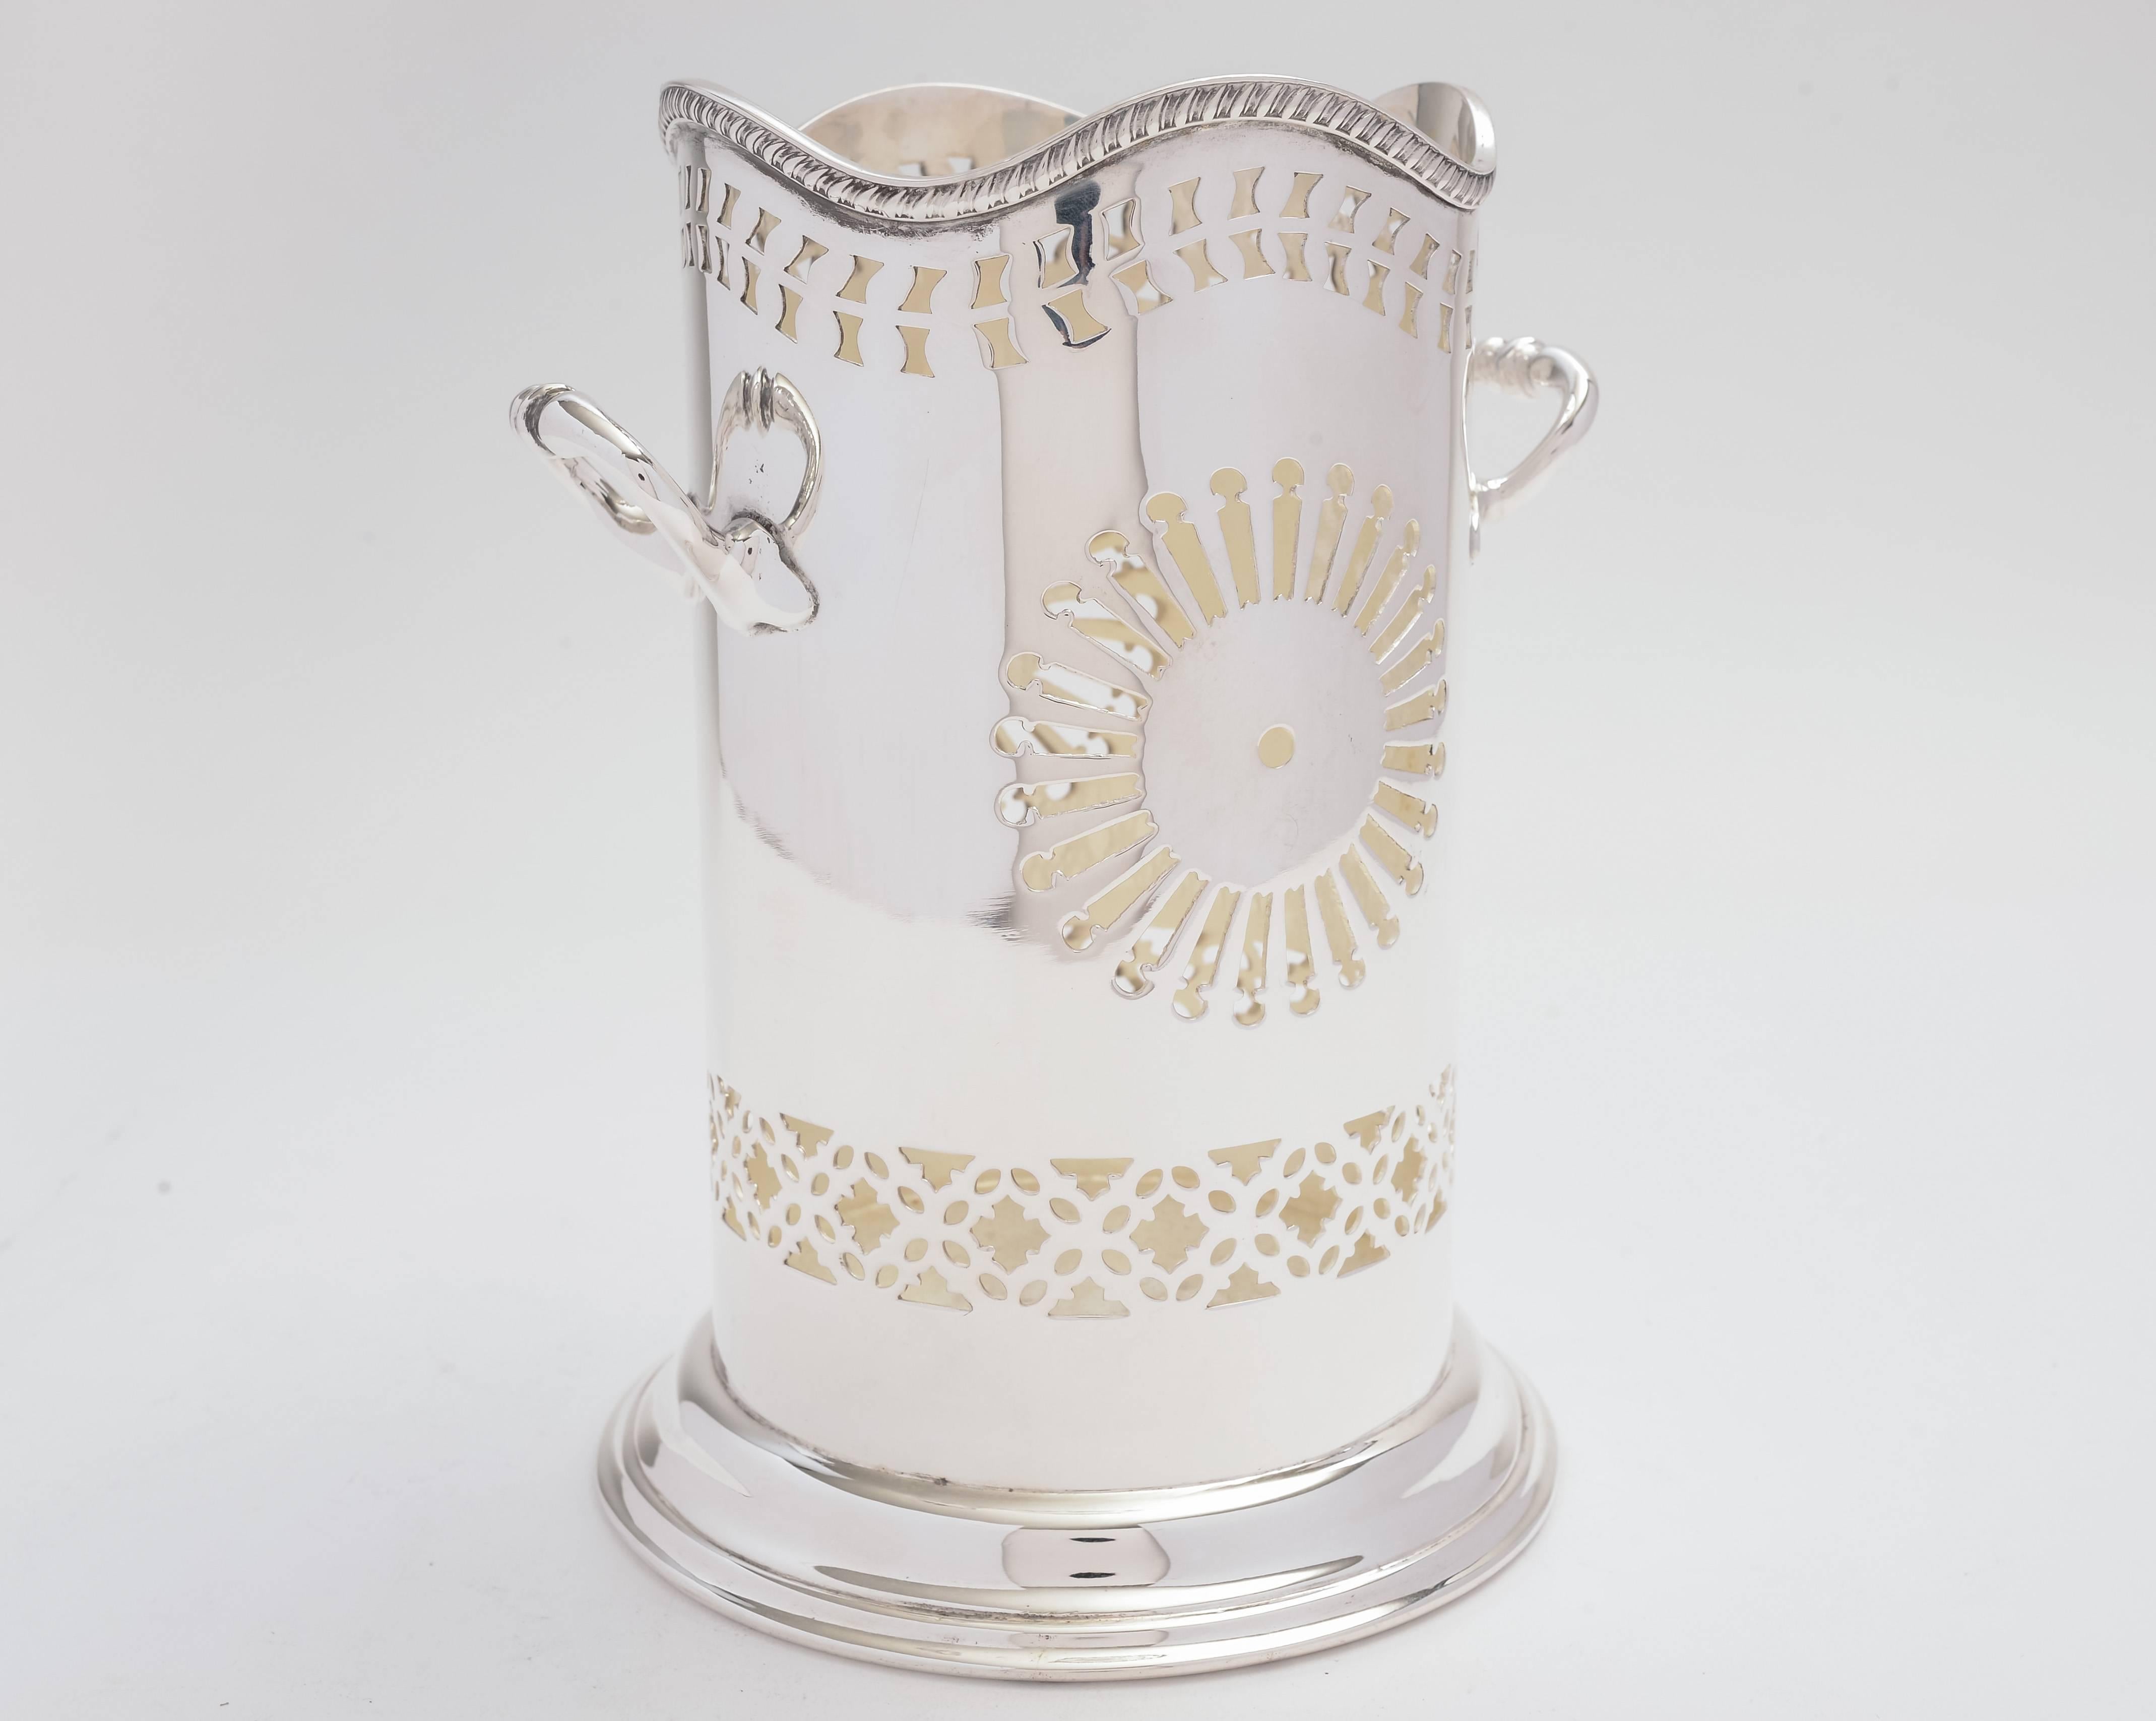 Stunning Victorian pierced bottle holder made by Deakin & Sons, Sidney Works, Birmingham. 

Measurements:
Height: 7 1/2